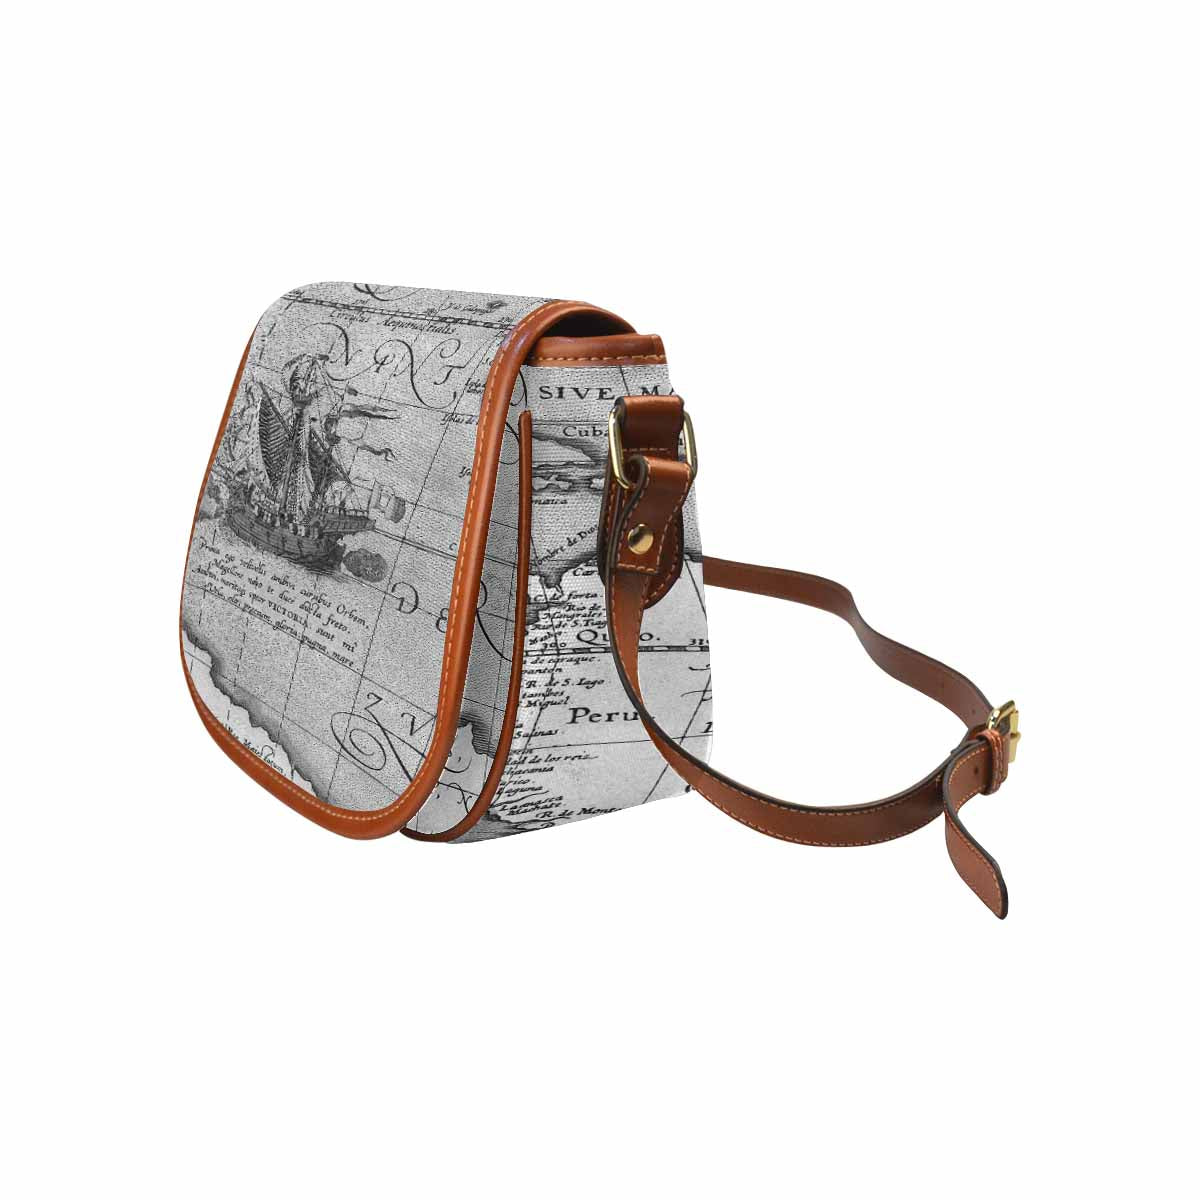 Antique Map design Handbag, saddle bag, Design 44